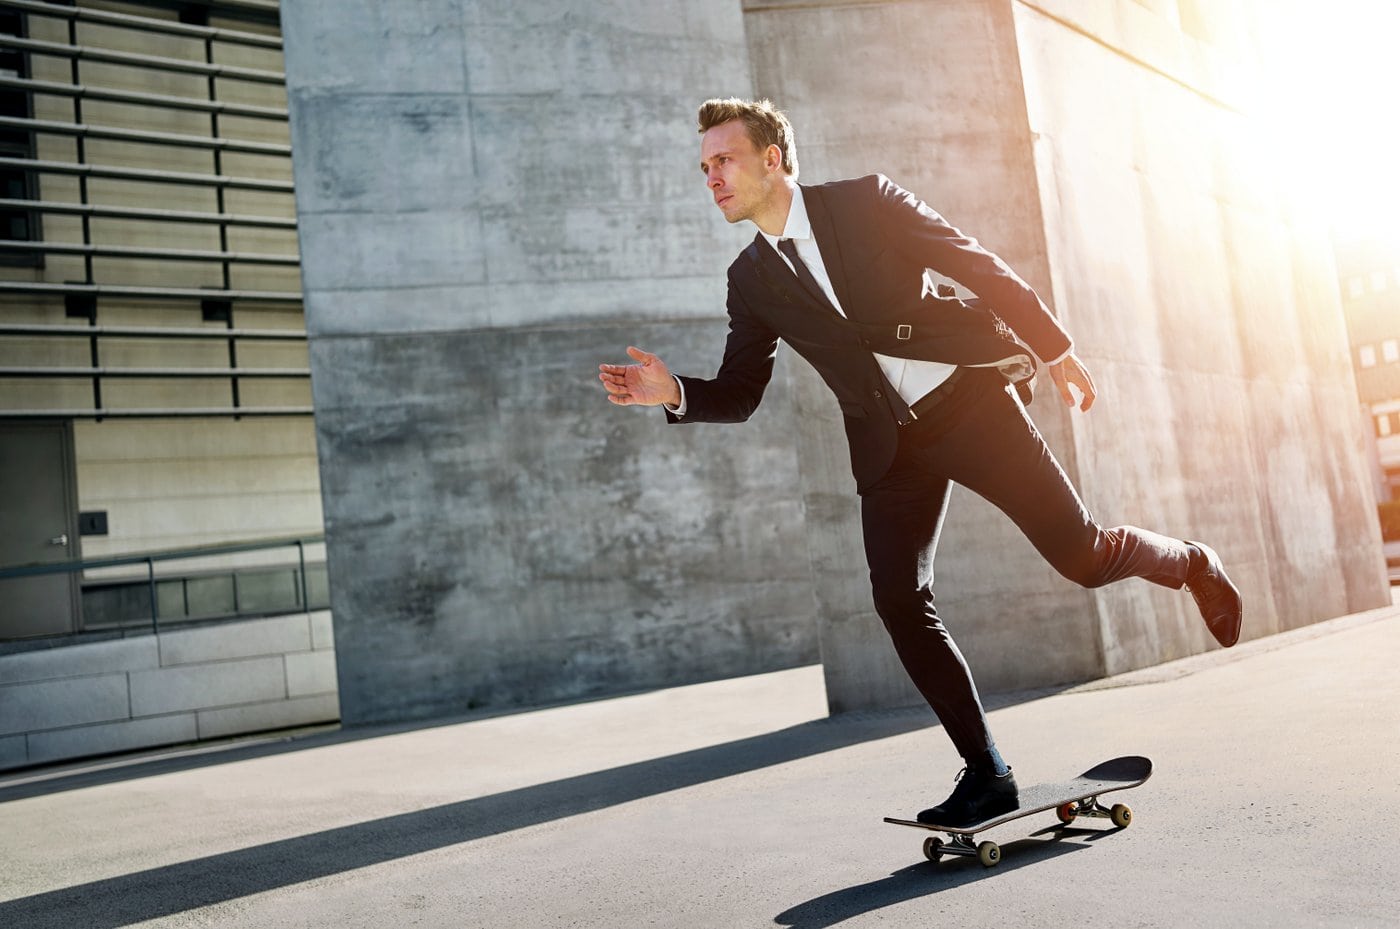 Businessman riding a skateboard